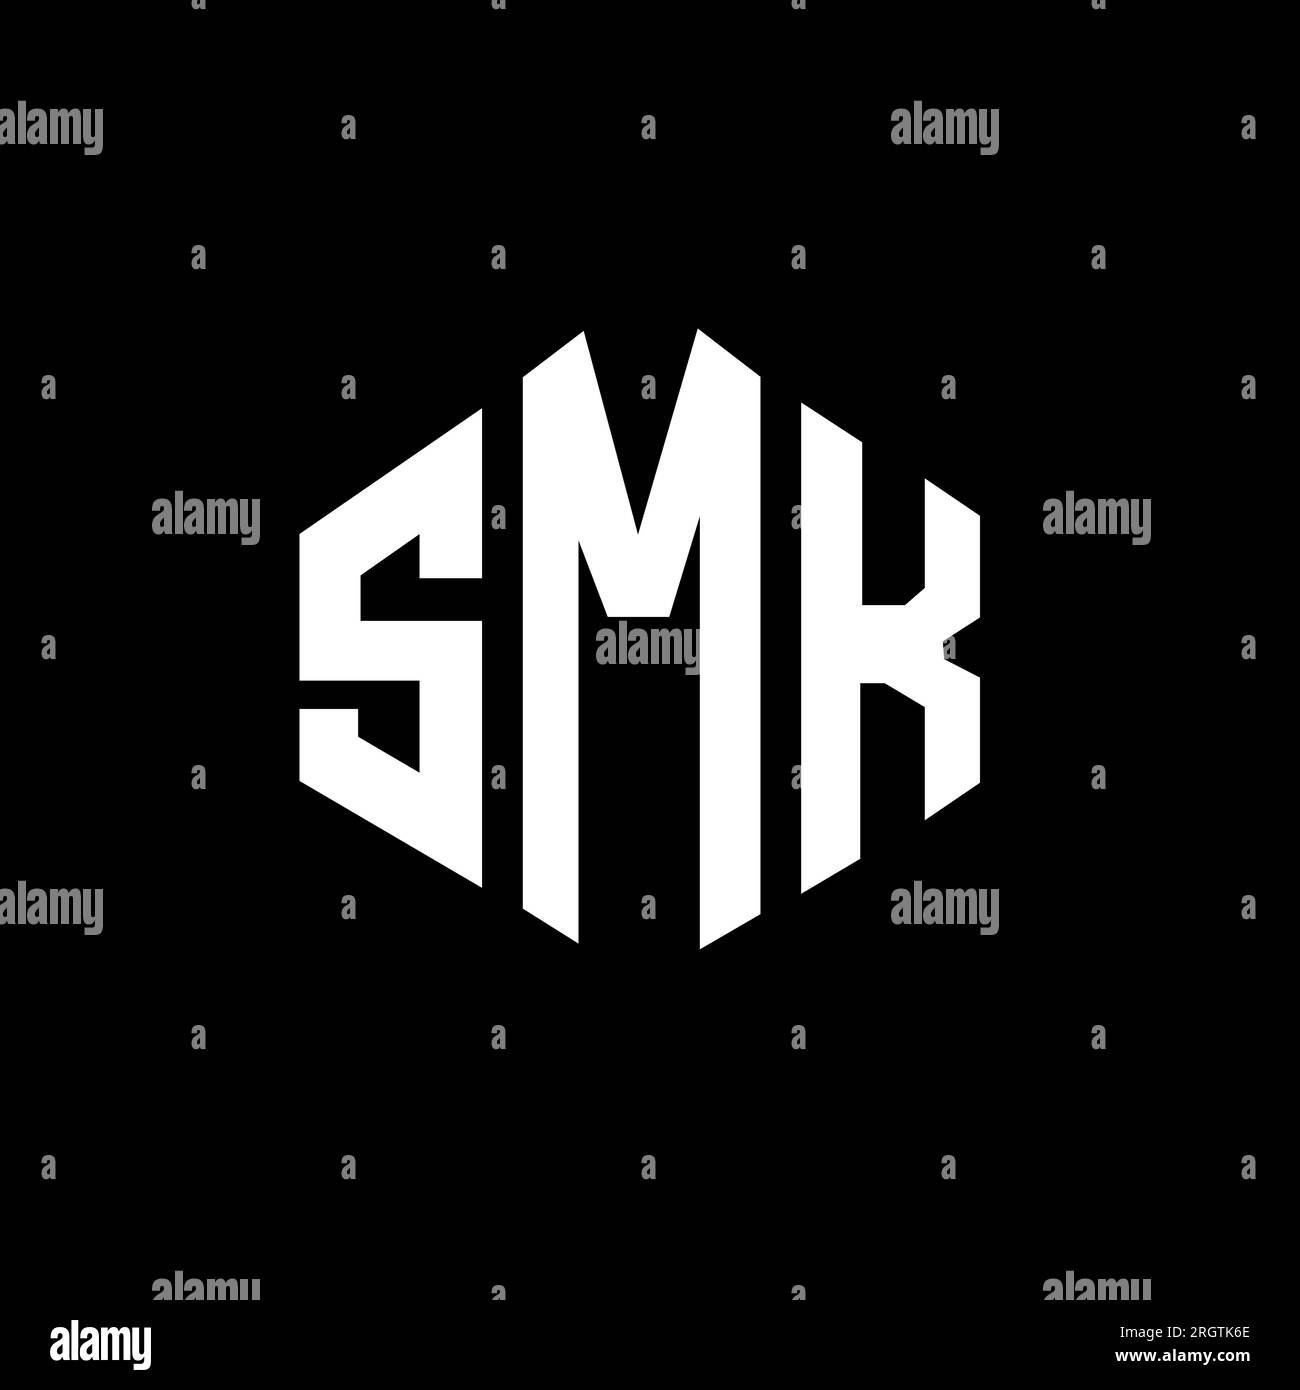 SMK letter logo design with polygon shape. SMK polygon and cube shape logo design. SMK hexagon vector logo template white and black colors. SMK monogr Stock Vector